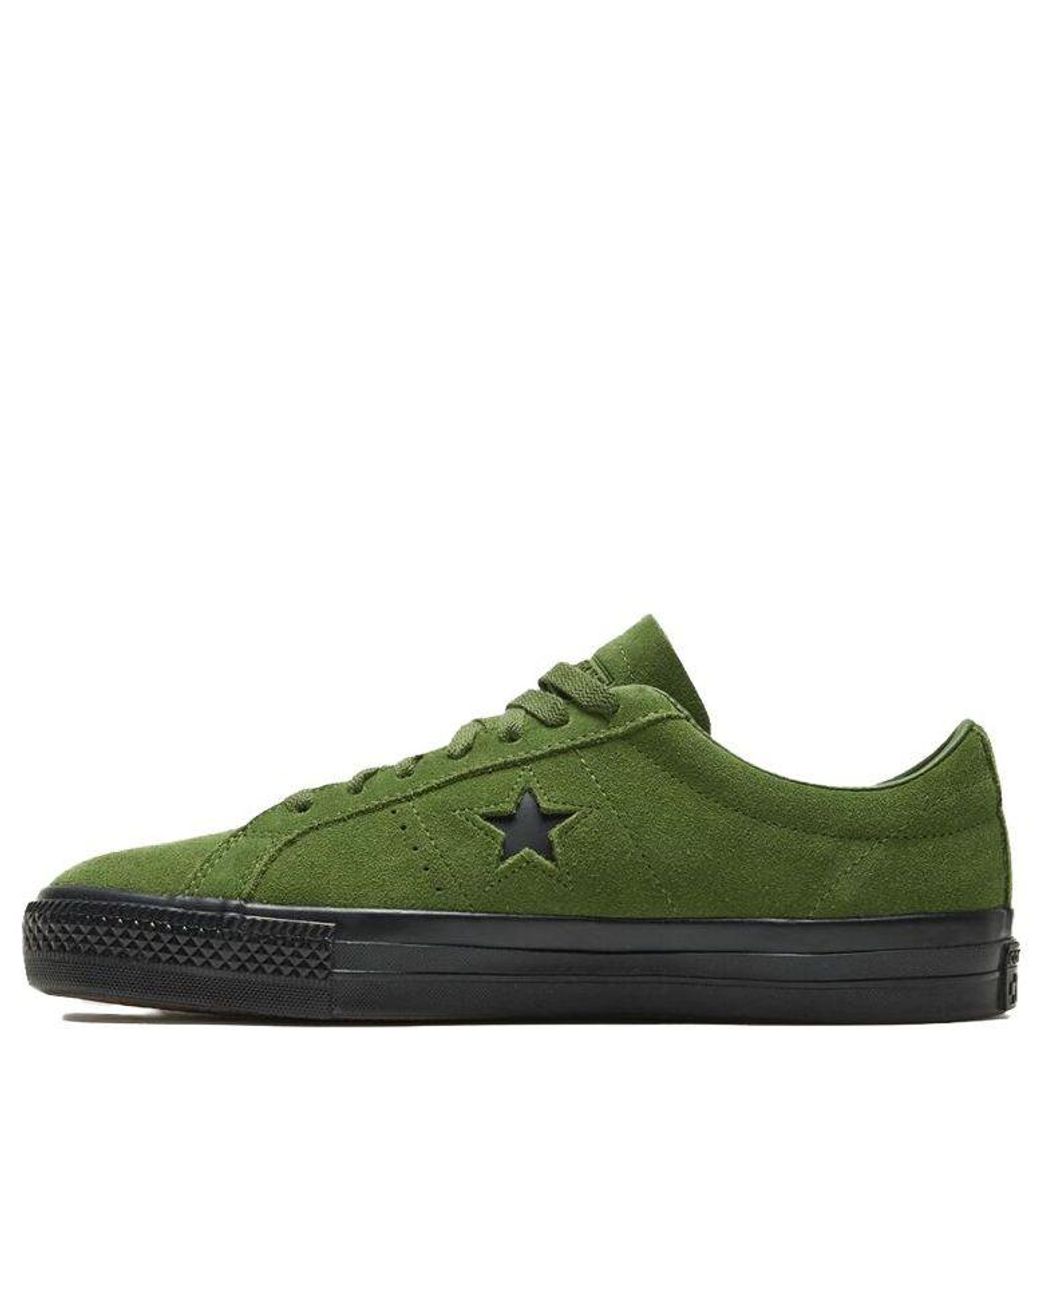 gjorde det jeg lytter til musik berolige Converse One Star Pro Retro Low Tops Casual Skateboarding Shoes Green | Lyst